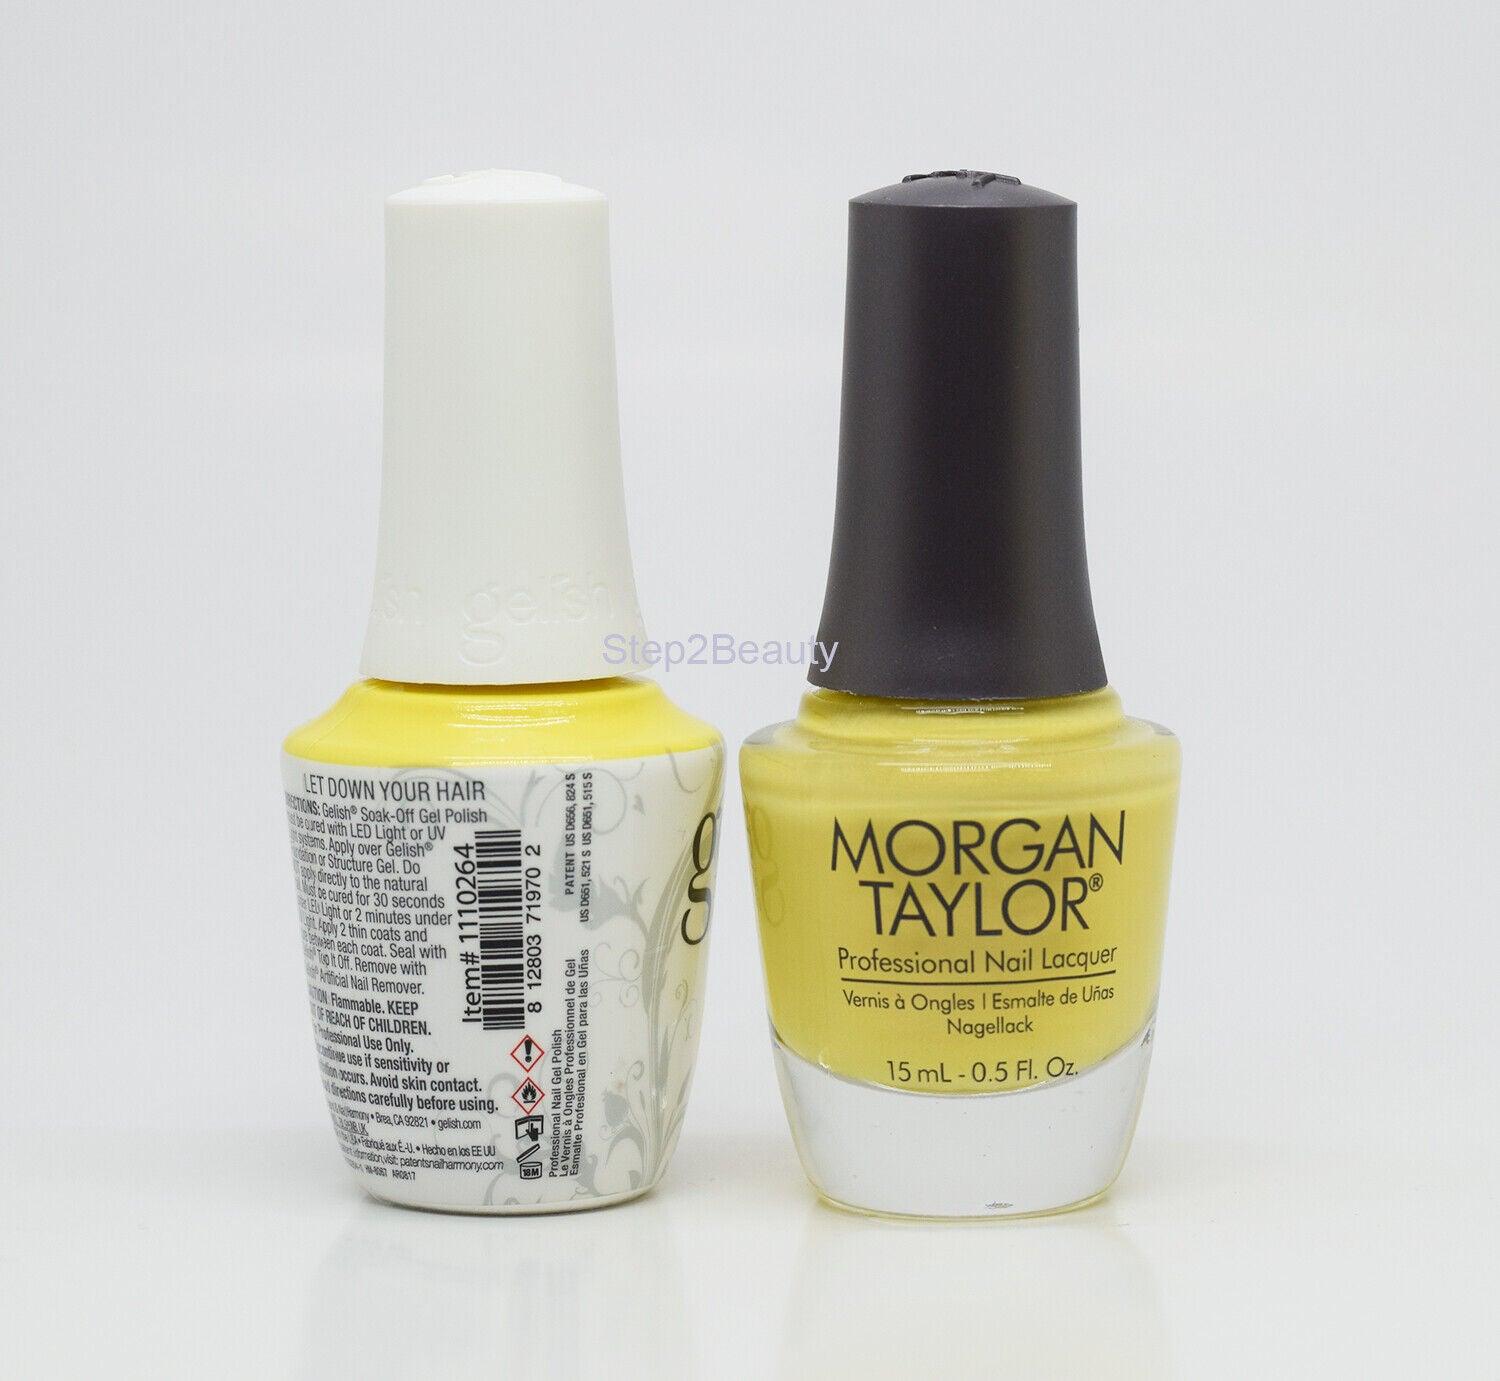 Gelish DUO Soak Off Gel Polish + Morgan Taylor Lacquer - #264 Let Down Your Hair